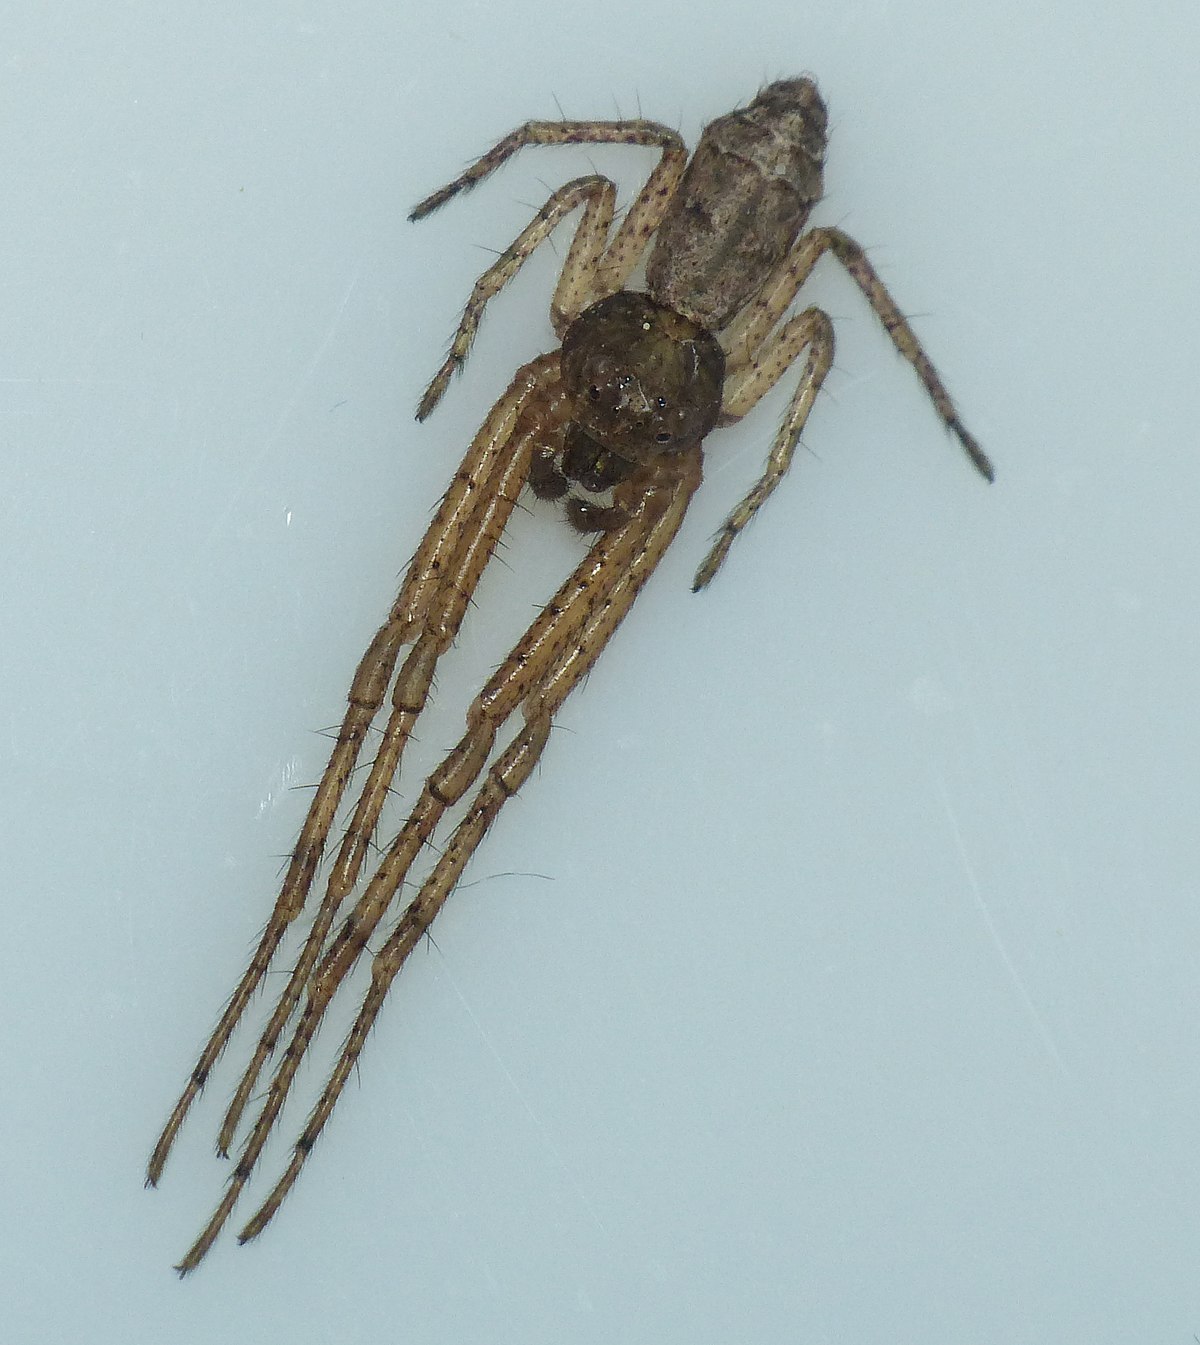 Tmarus angulatus spider on a white surface